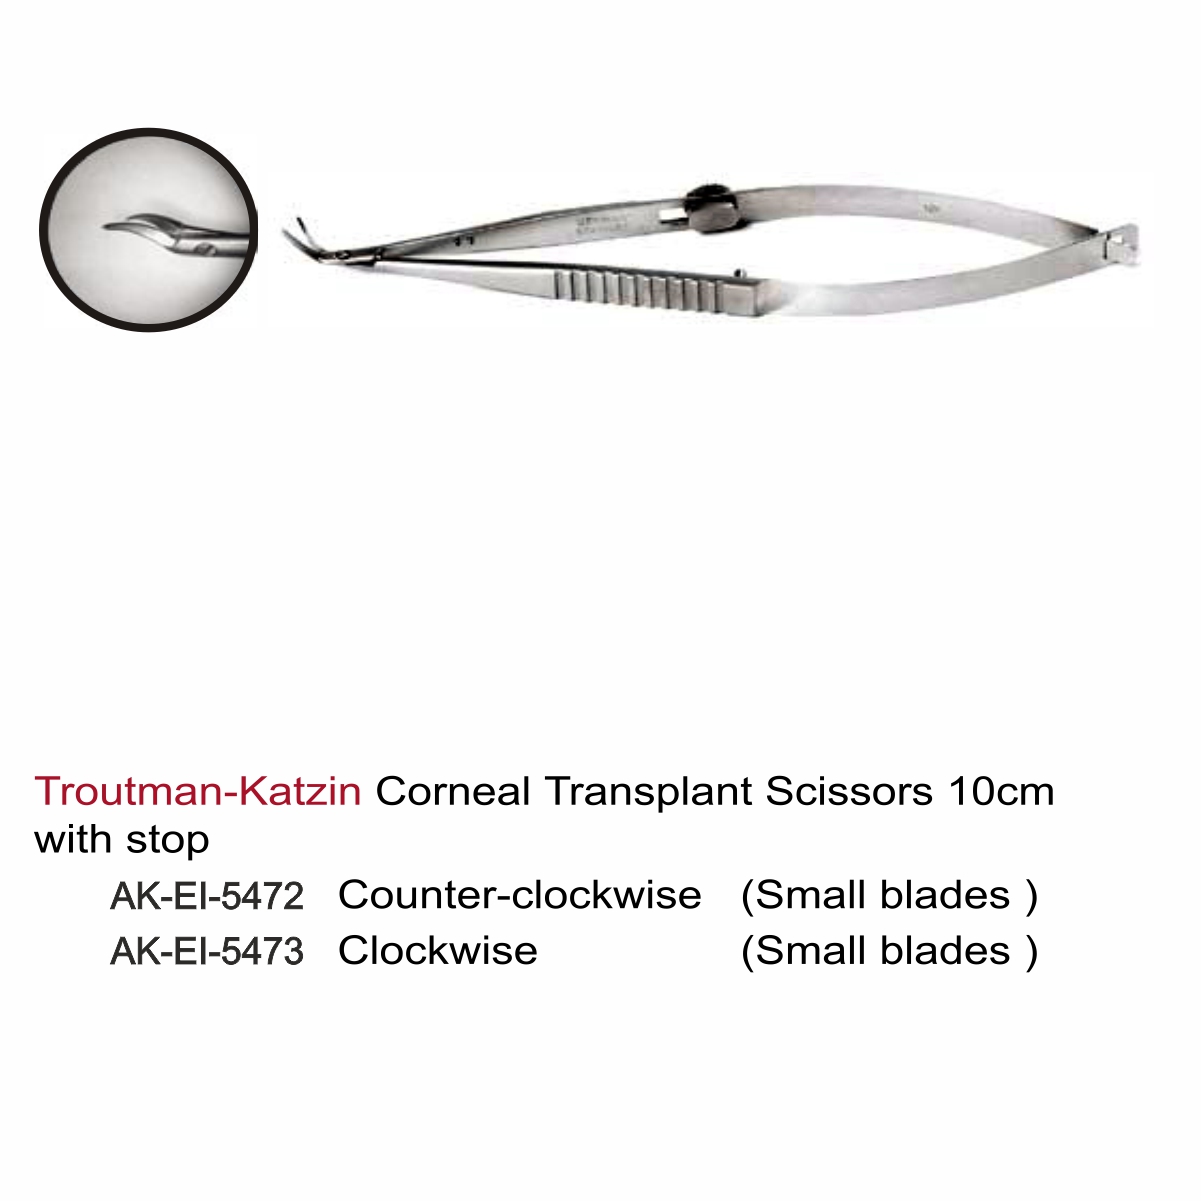 Troutman-Katzin Corneal Transplant Scissors